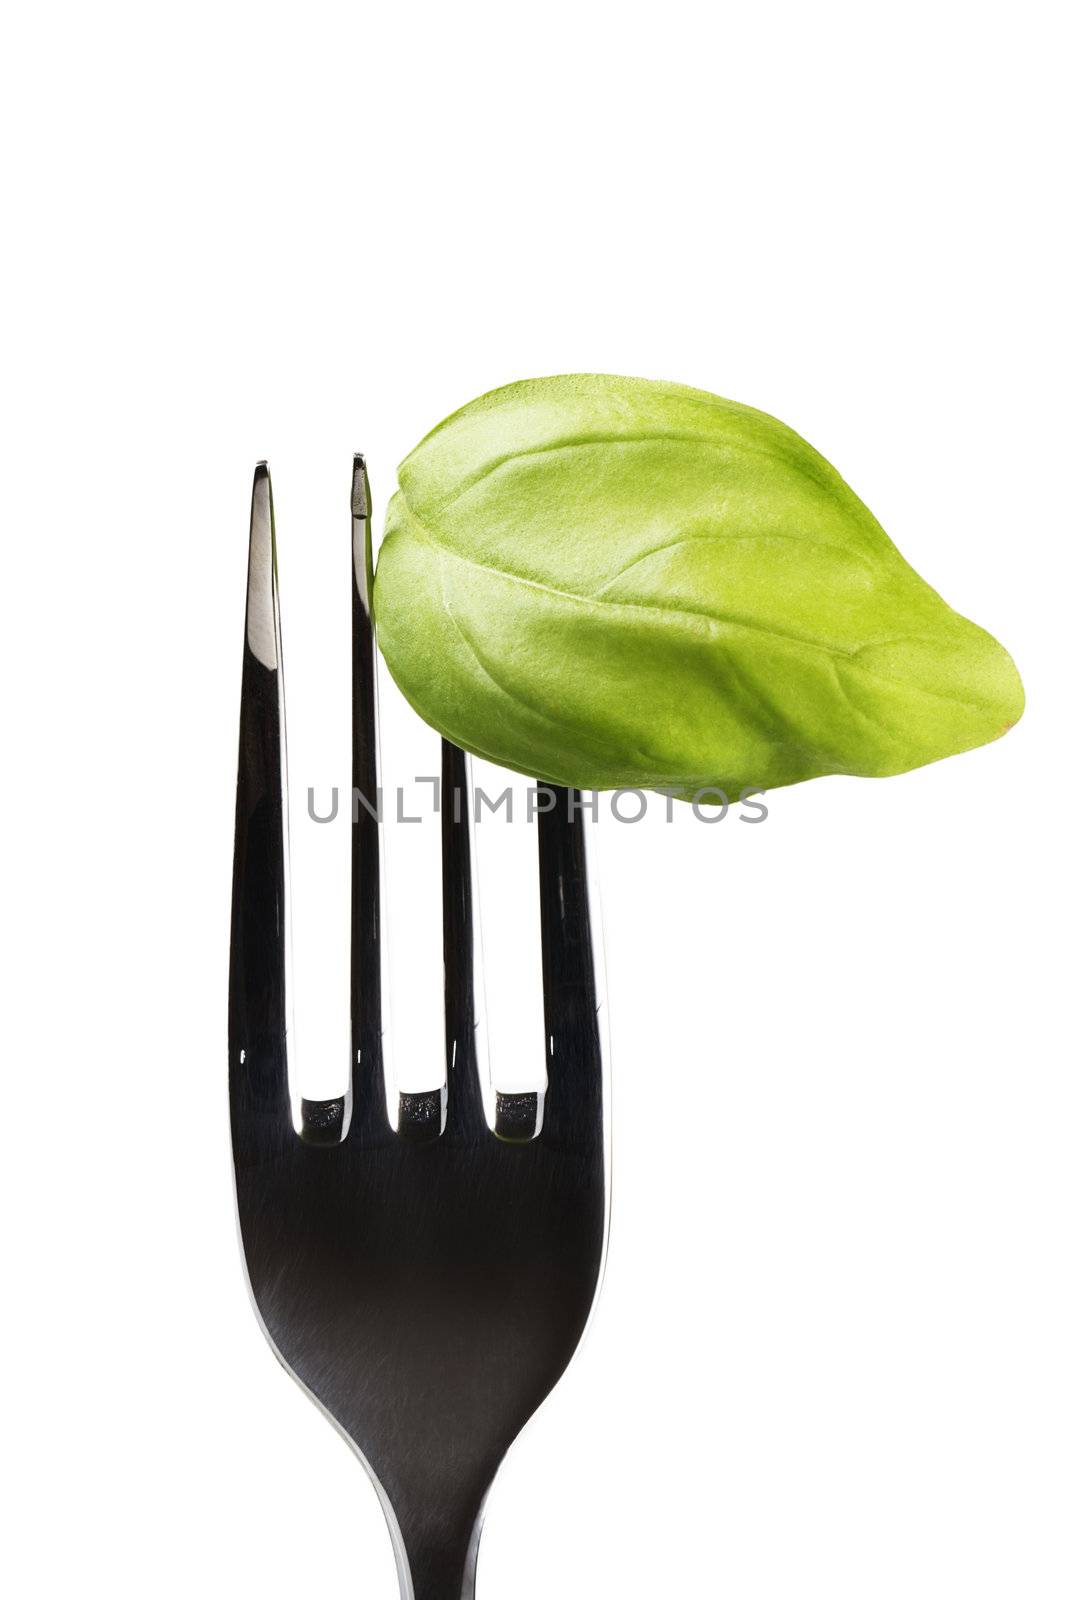 one green basil leaf on fork